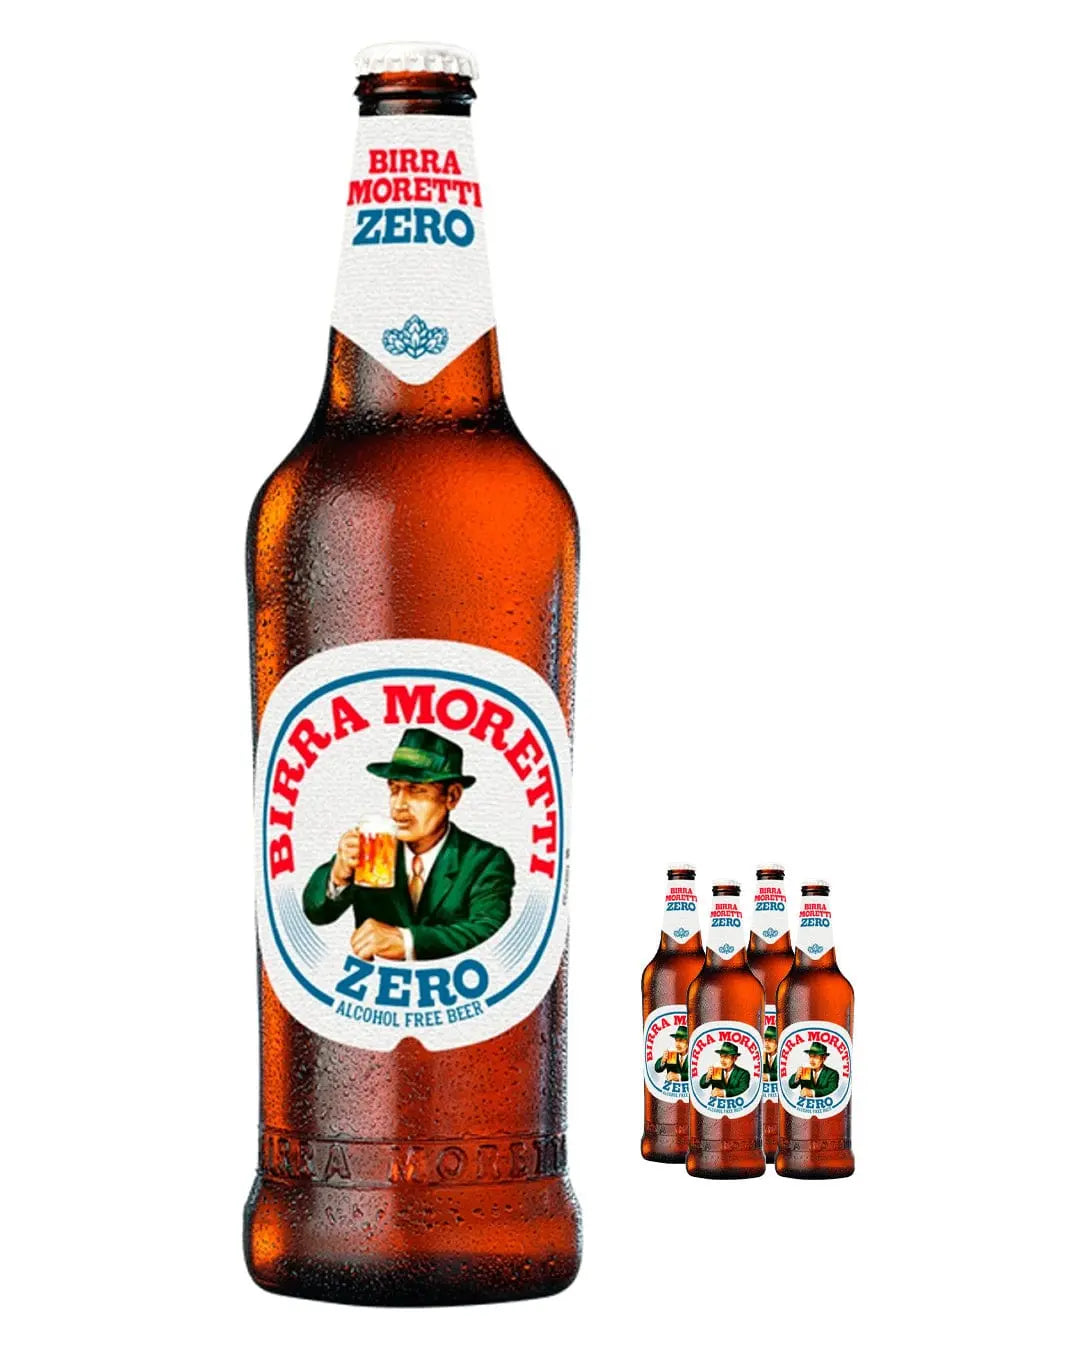 Birra Moretti Zero Alcohol Free Beer Multipack, 4 x 330 ml Beer